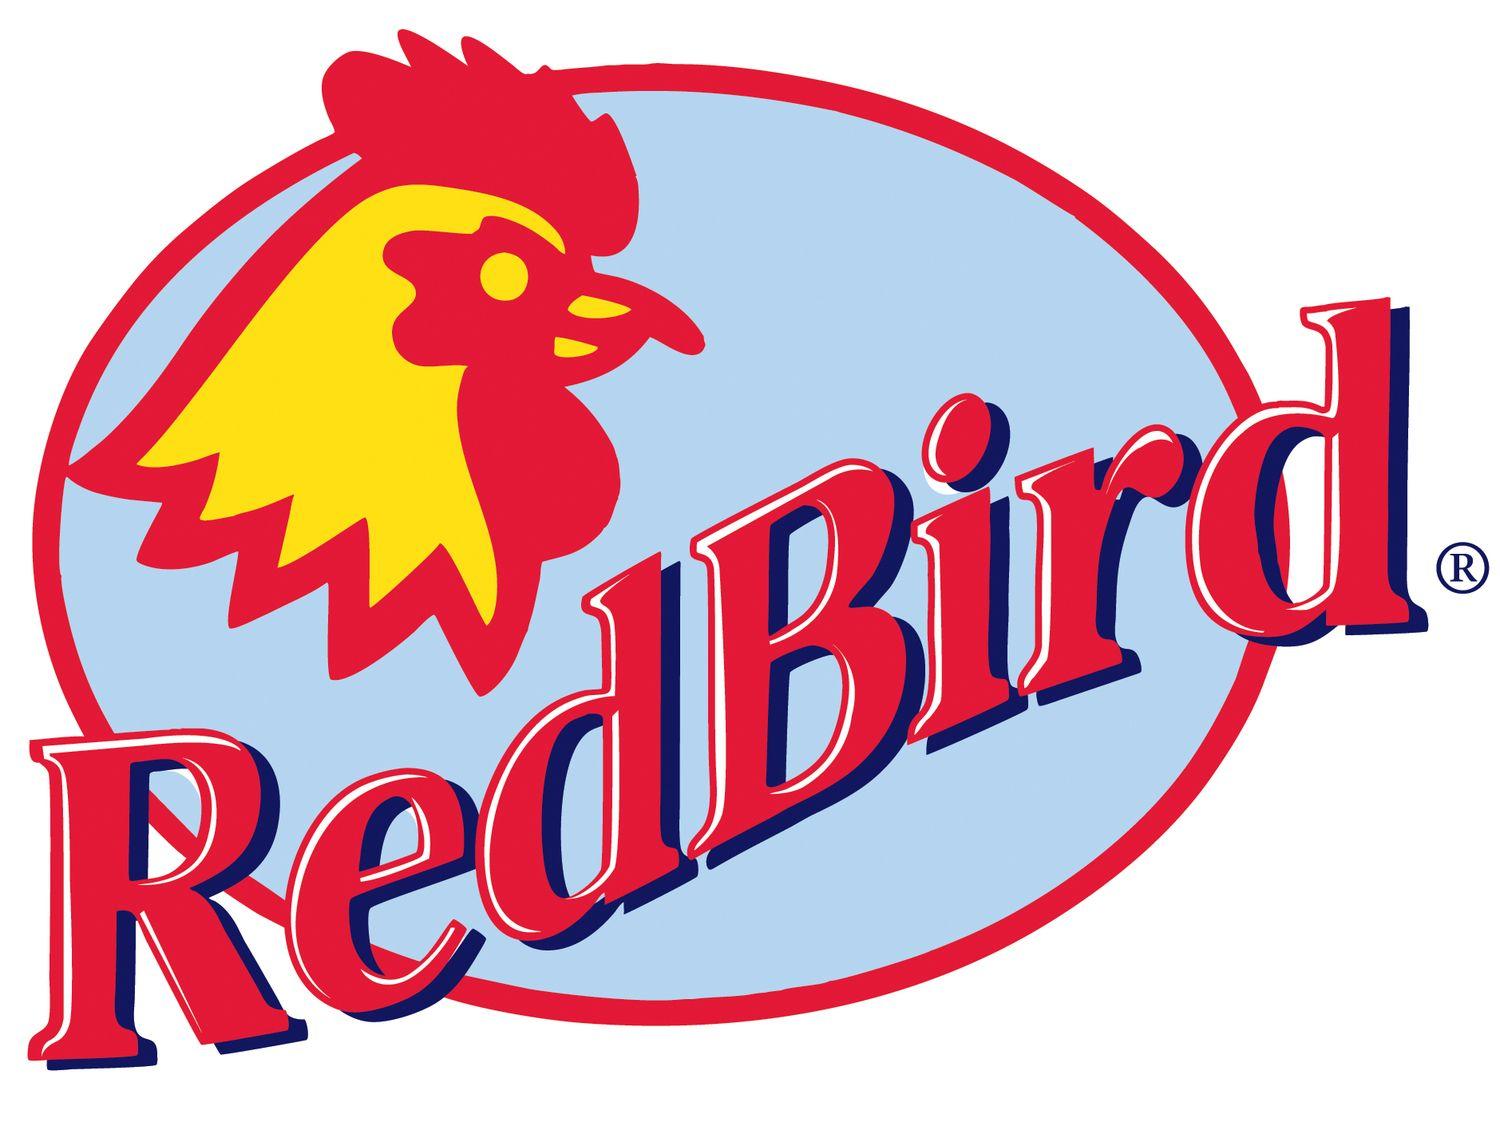 Chicken Bird Logo - Red Bird Farms